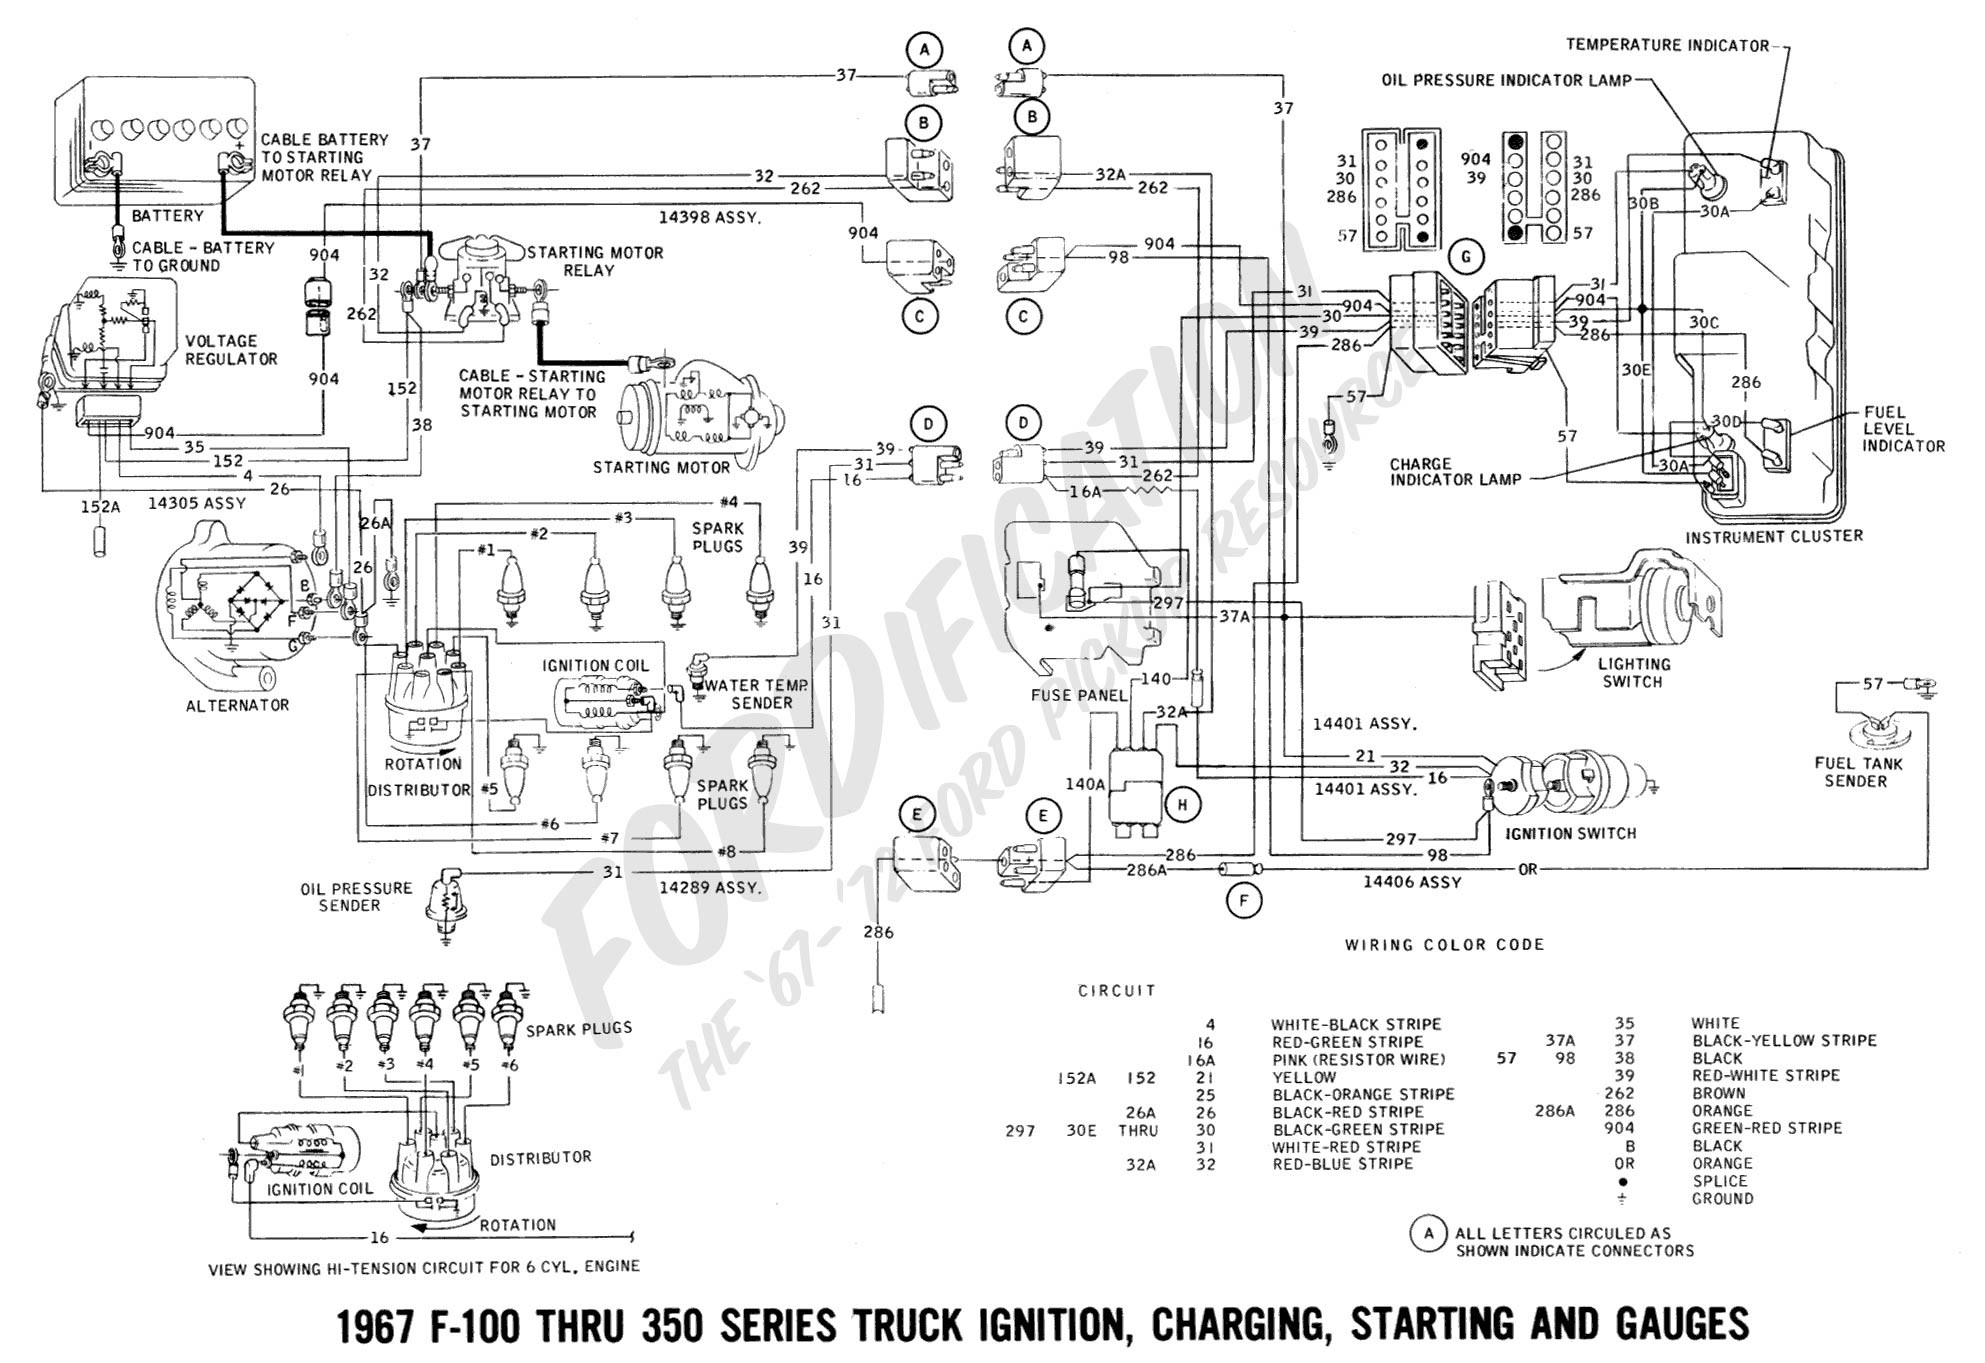 Pickup Truck Diagram Free Wiring Diagram for ford Pickups Of Pickup Truck Diagram